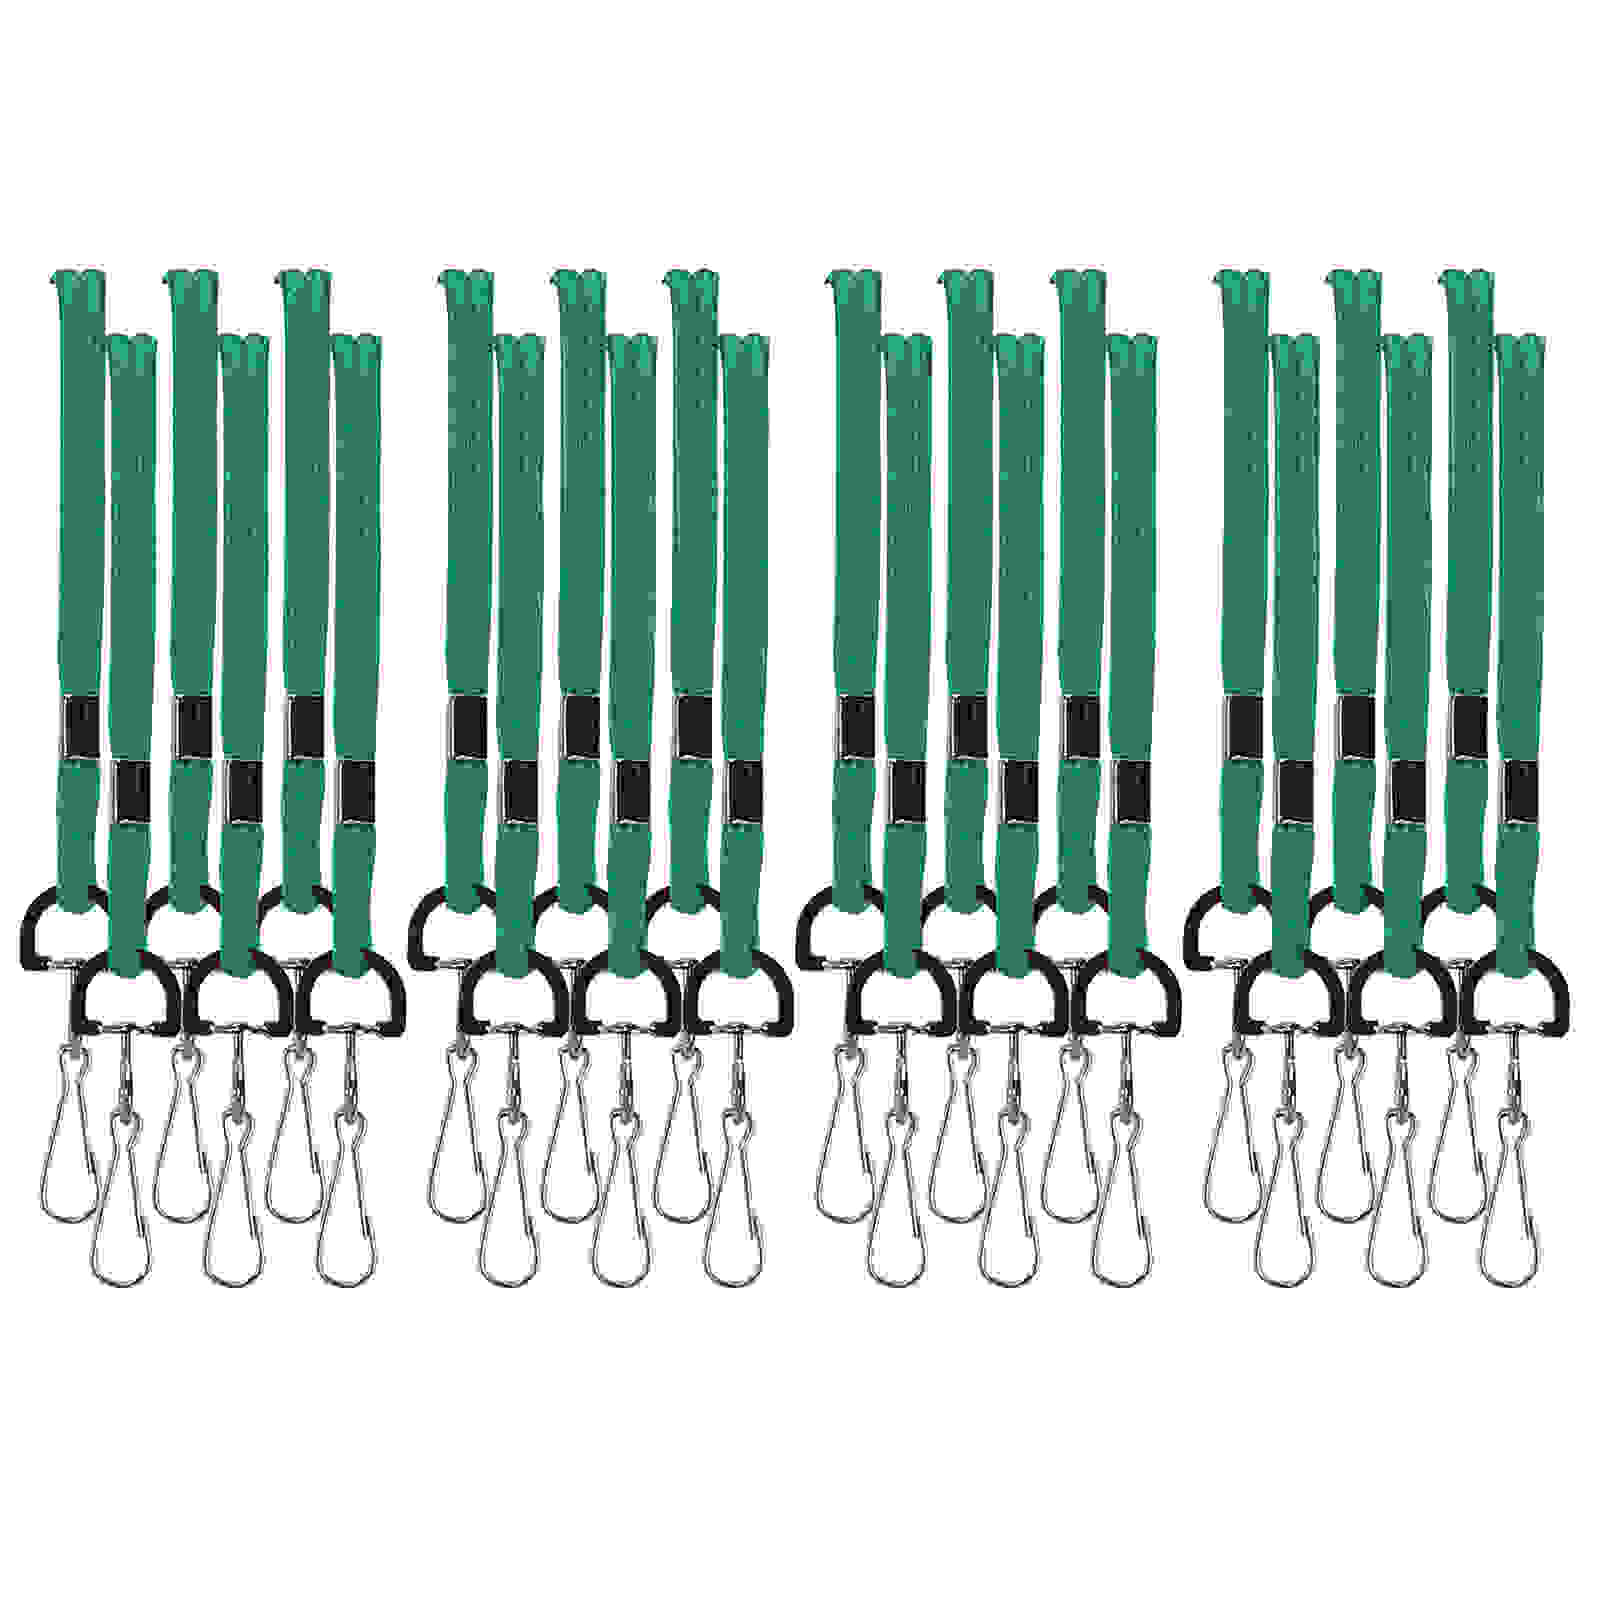 Standard Lanyard Hook Rope Style, Green, Pack of 24